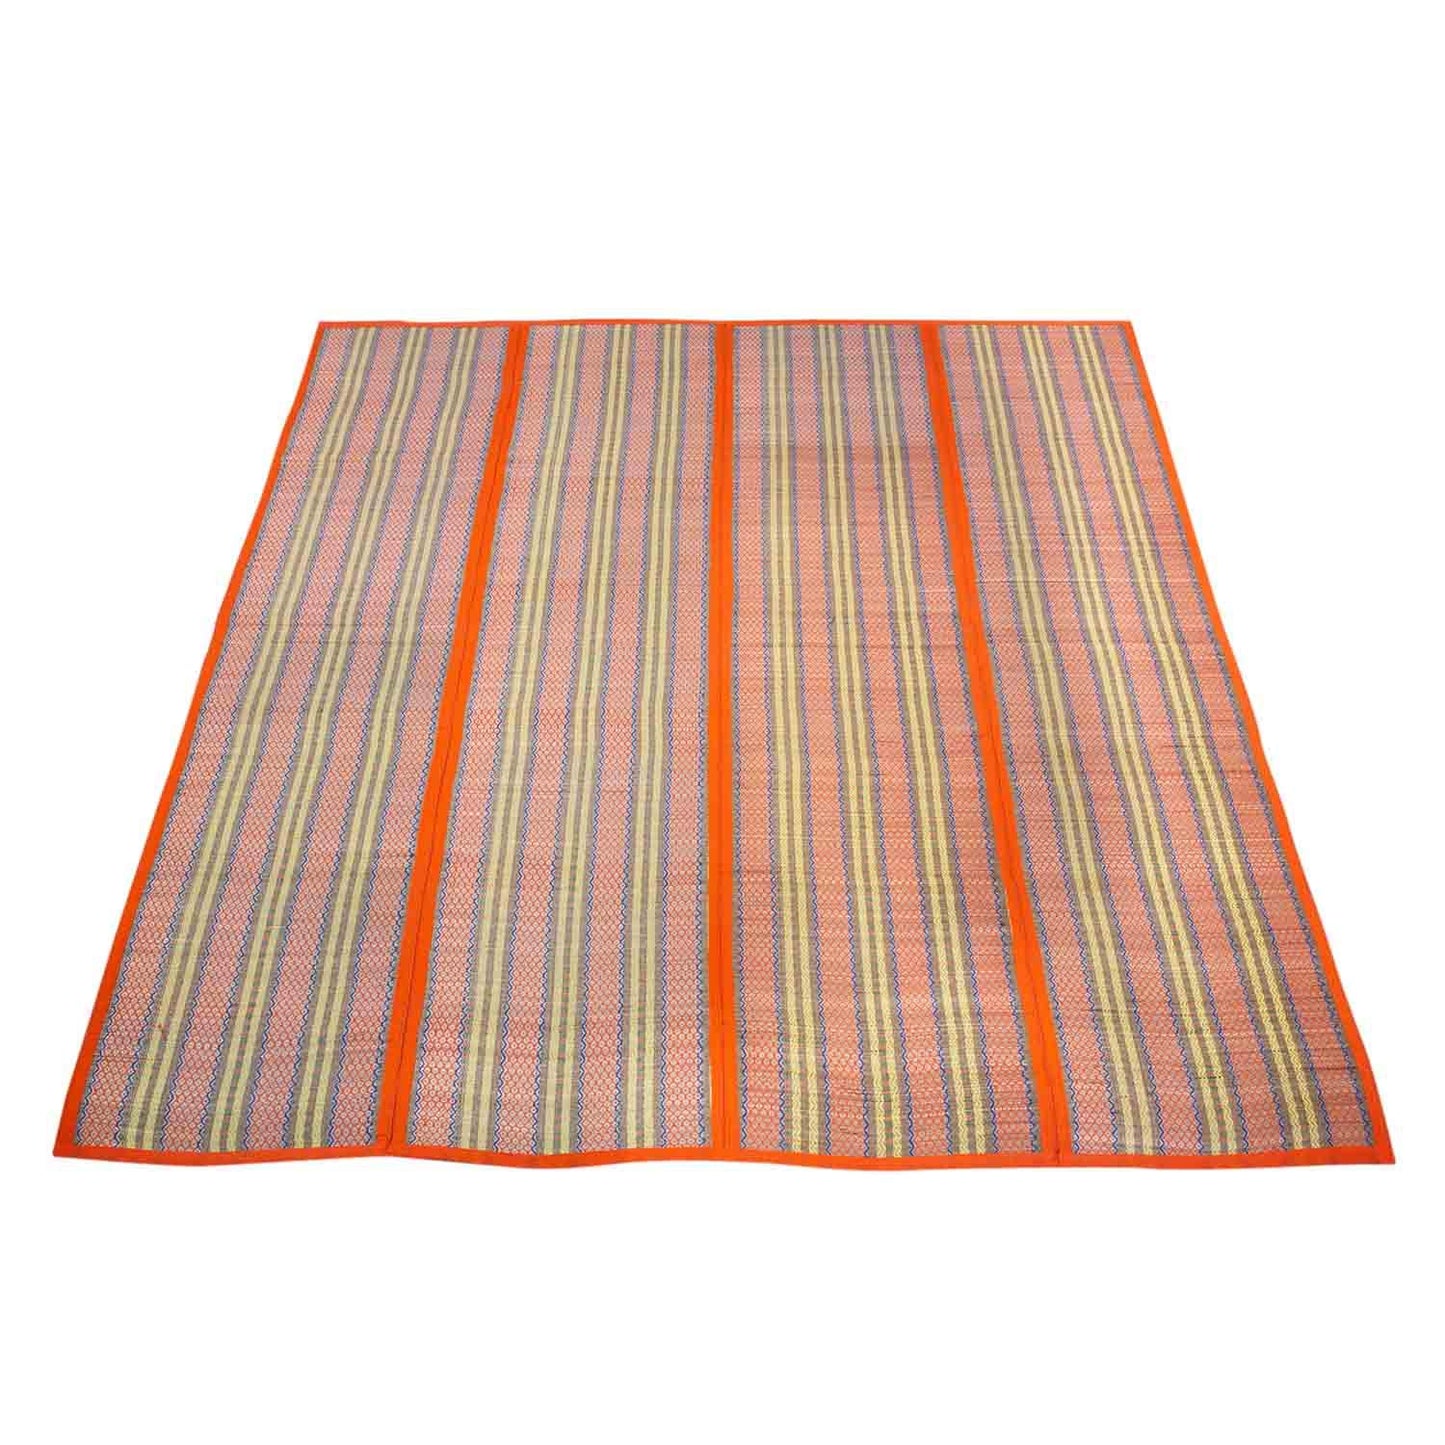 Chatai  Floor Mat Foldable handwoven Organic made of Madurkathi Grass for Sleeping, Sitting on Floor - T3-41